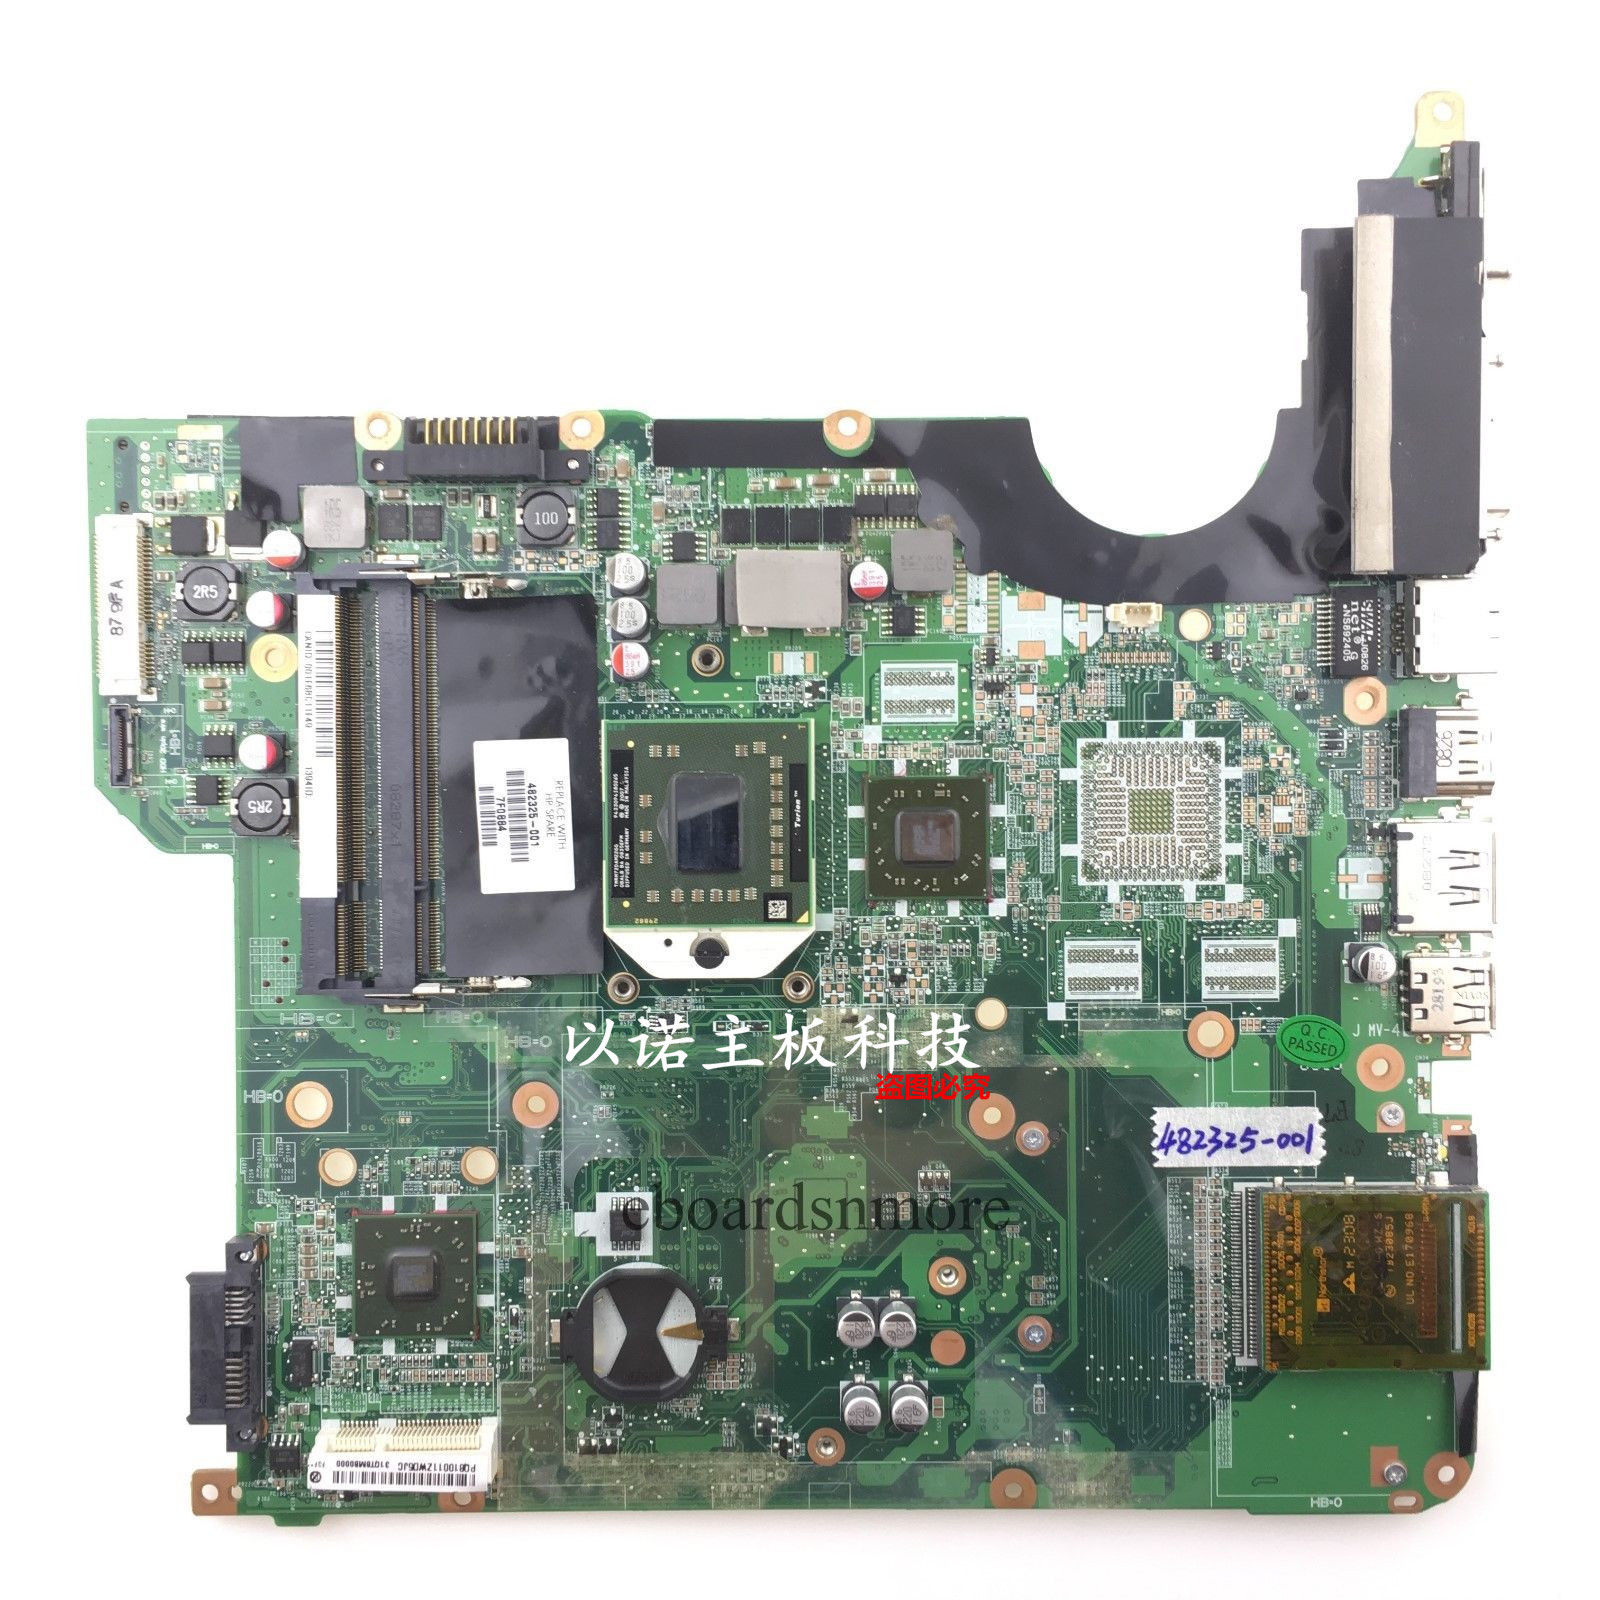 482325-001 AMD motherboard +CPU for HP DV5 DV5-1000 Series Laptops DA0QT8MB6F0 A Compatible CPU Brand: AMD - Click Image to Close